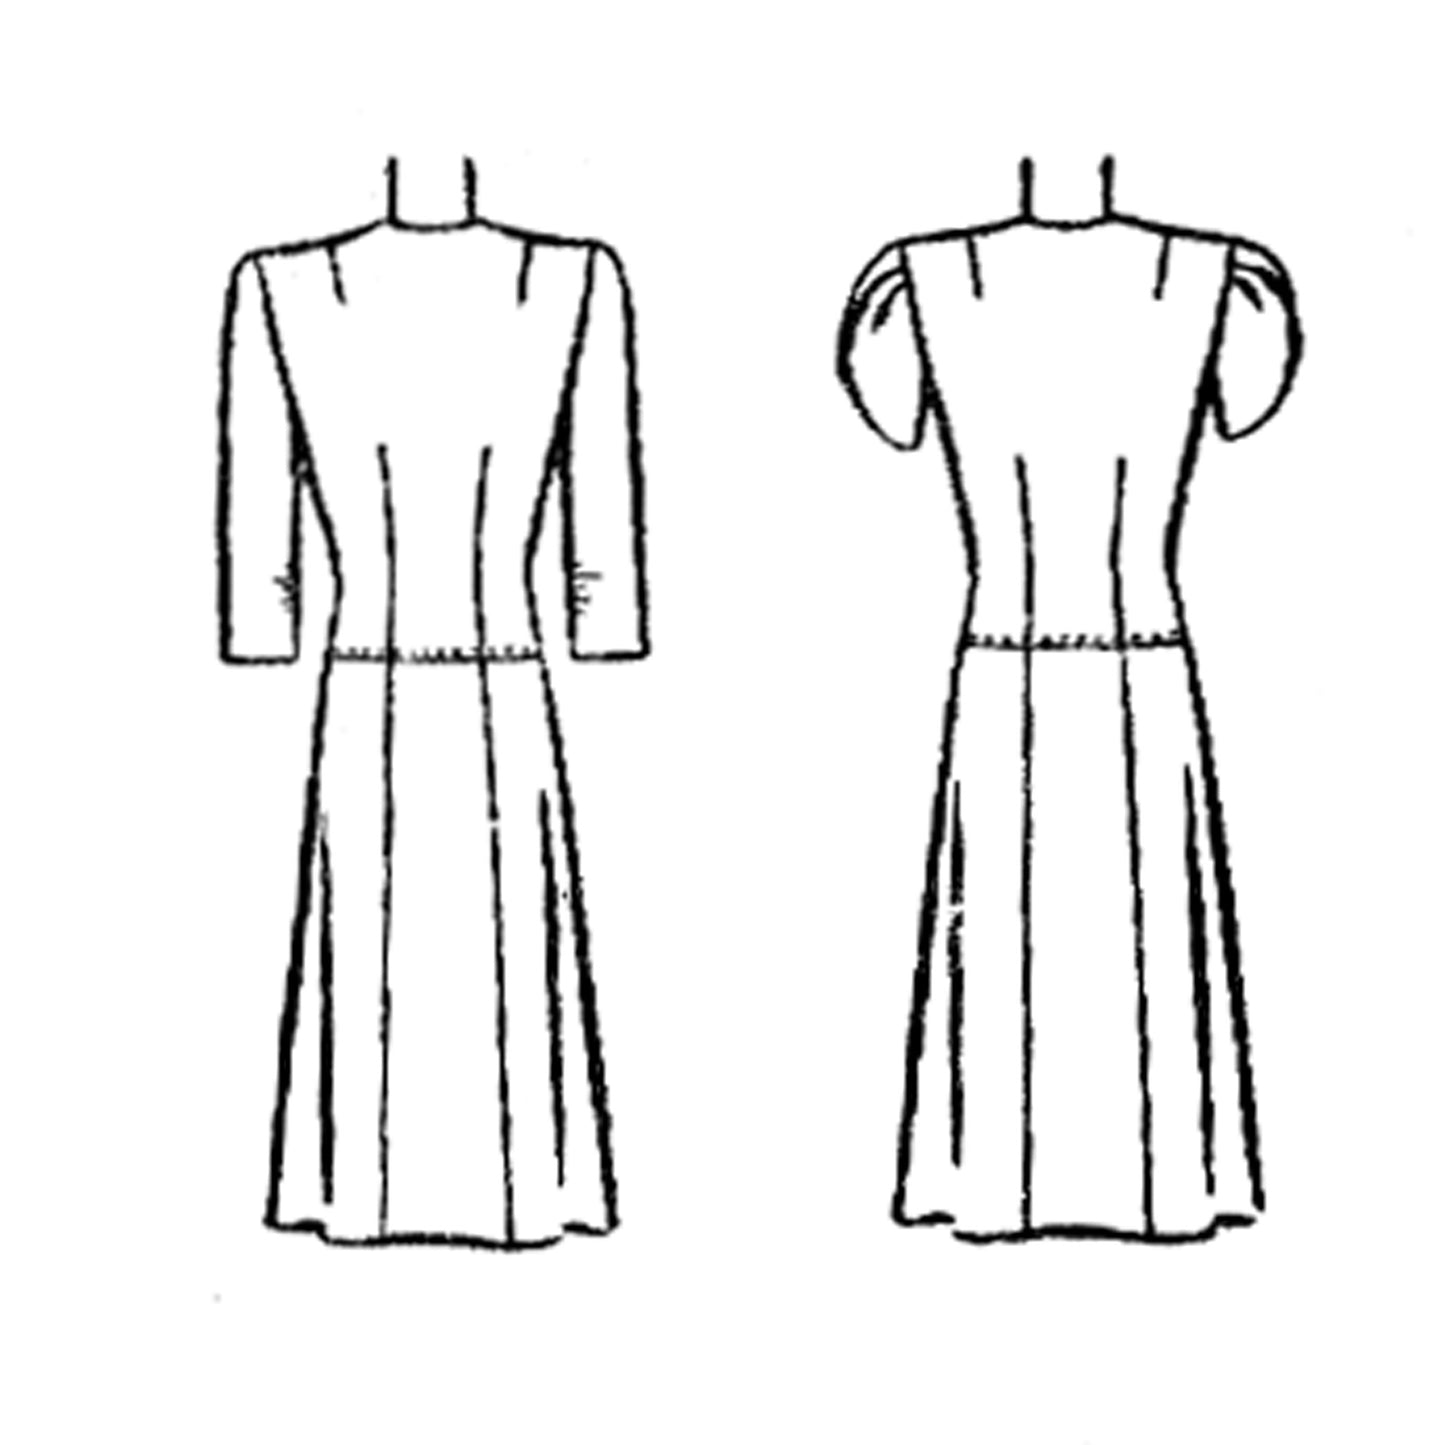 1940s Sewing Pattern, Garland Draped Dress - Bust: 30” (76cm)